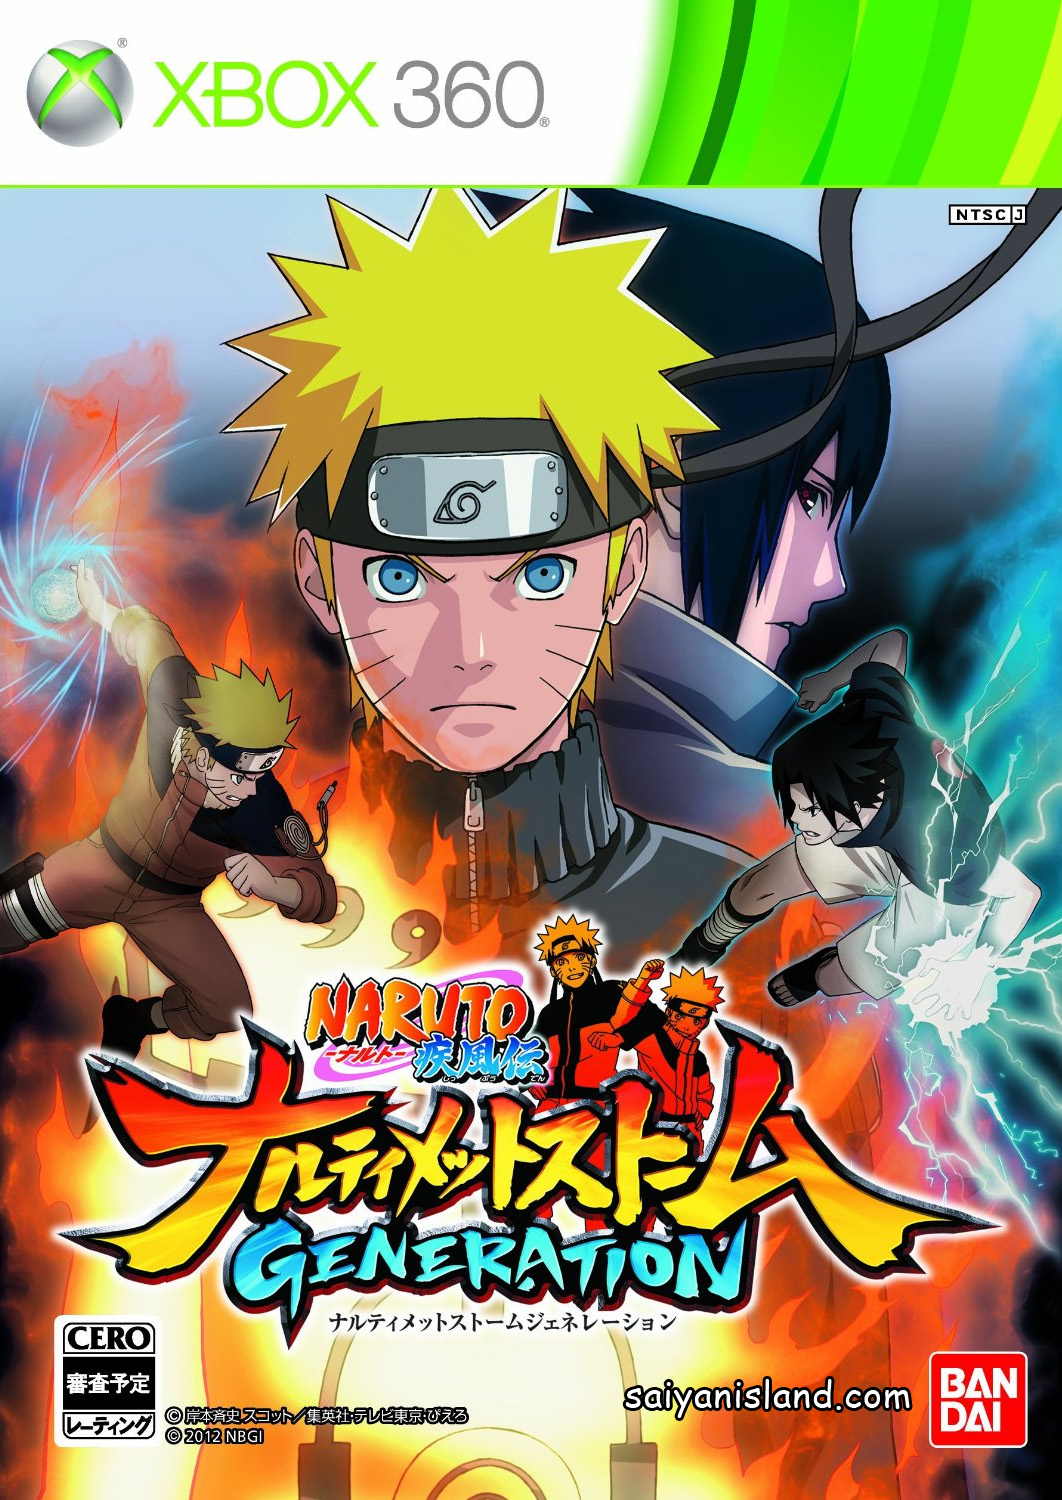 XBOX 360 - Naruto Shippuden: Ultimate Ninja Storm Generations